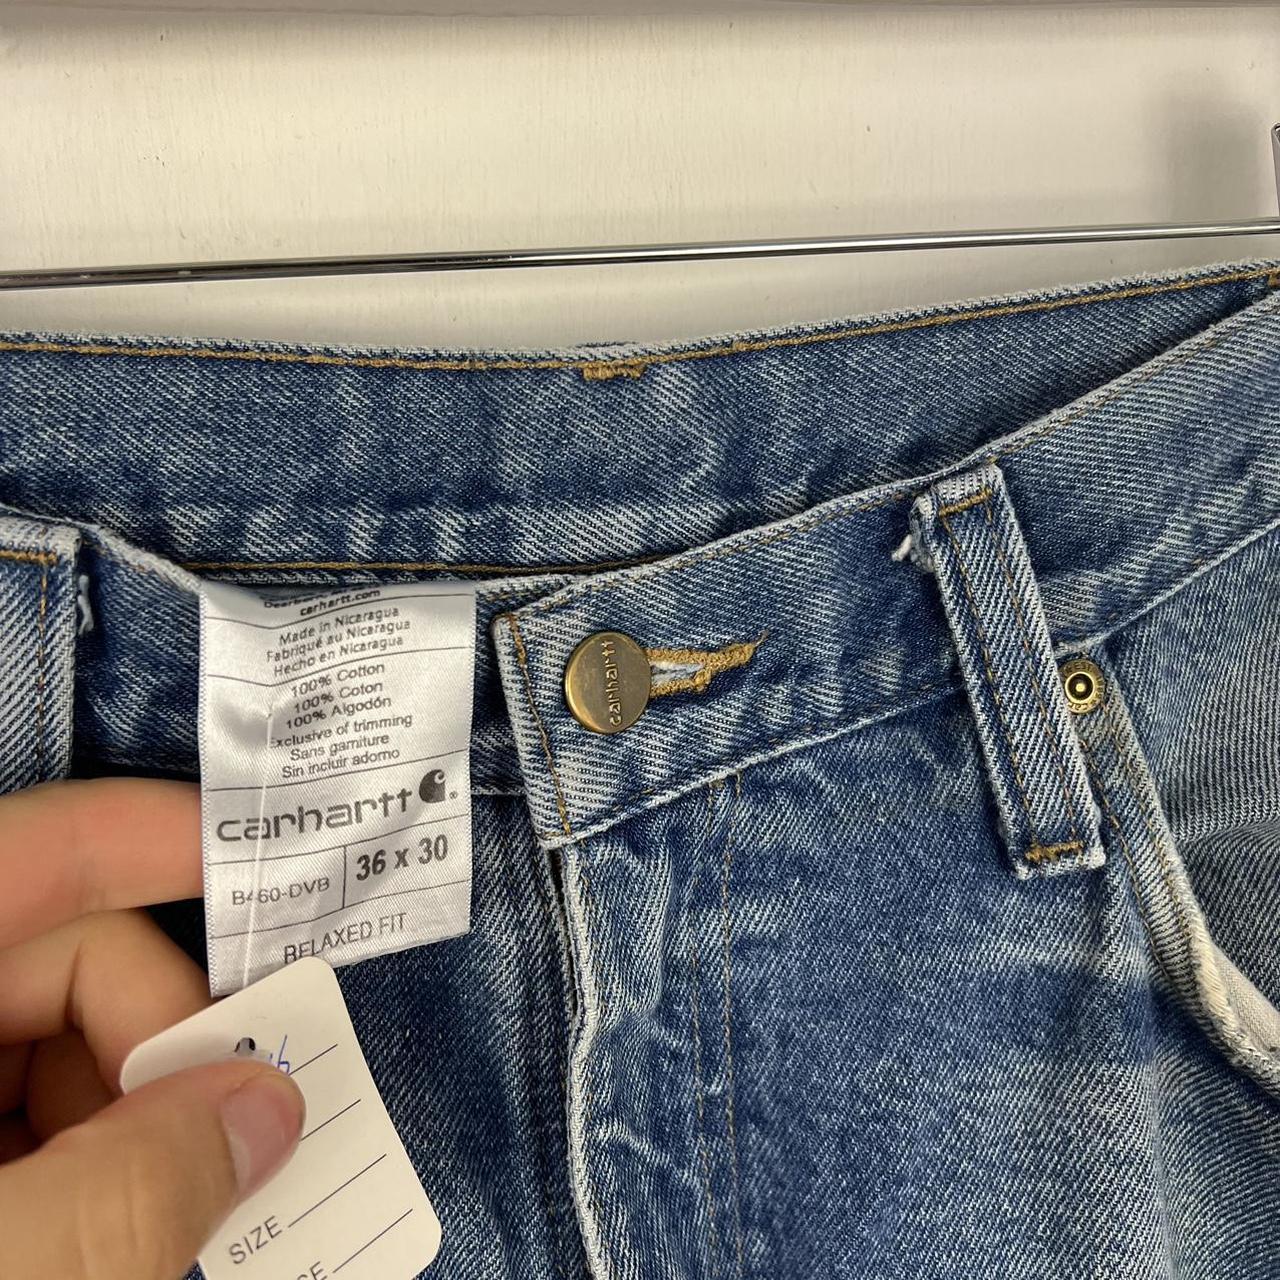 Carhartt denim jeans 36x30